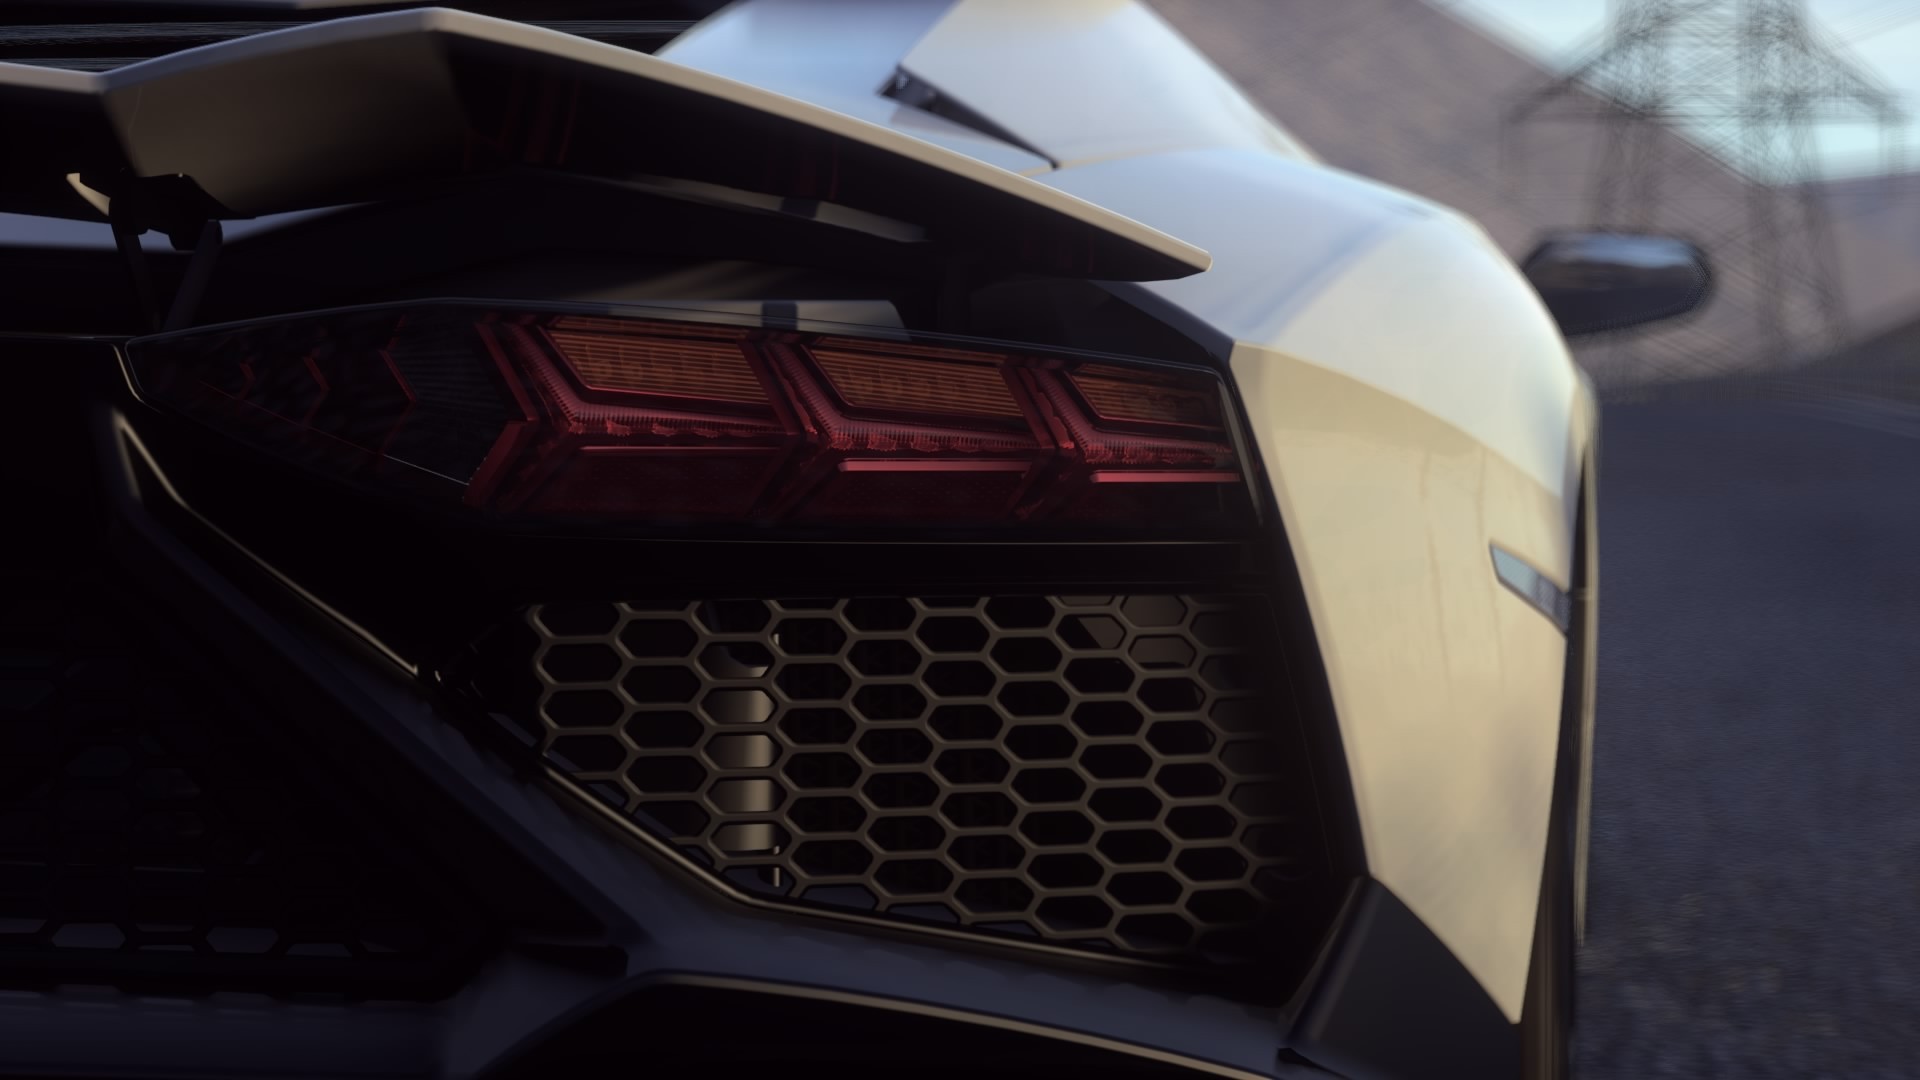 General 1920x1080 Driveclub Lamborghini car supercars vehicle video games screen shot